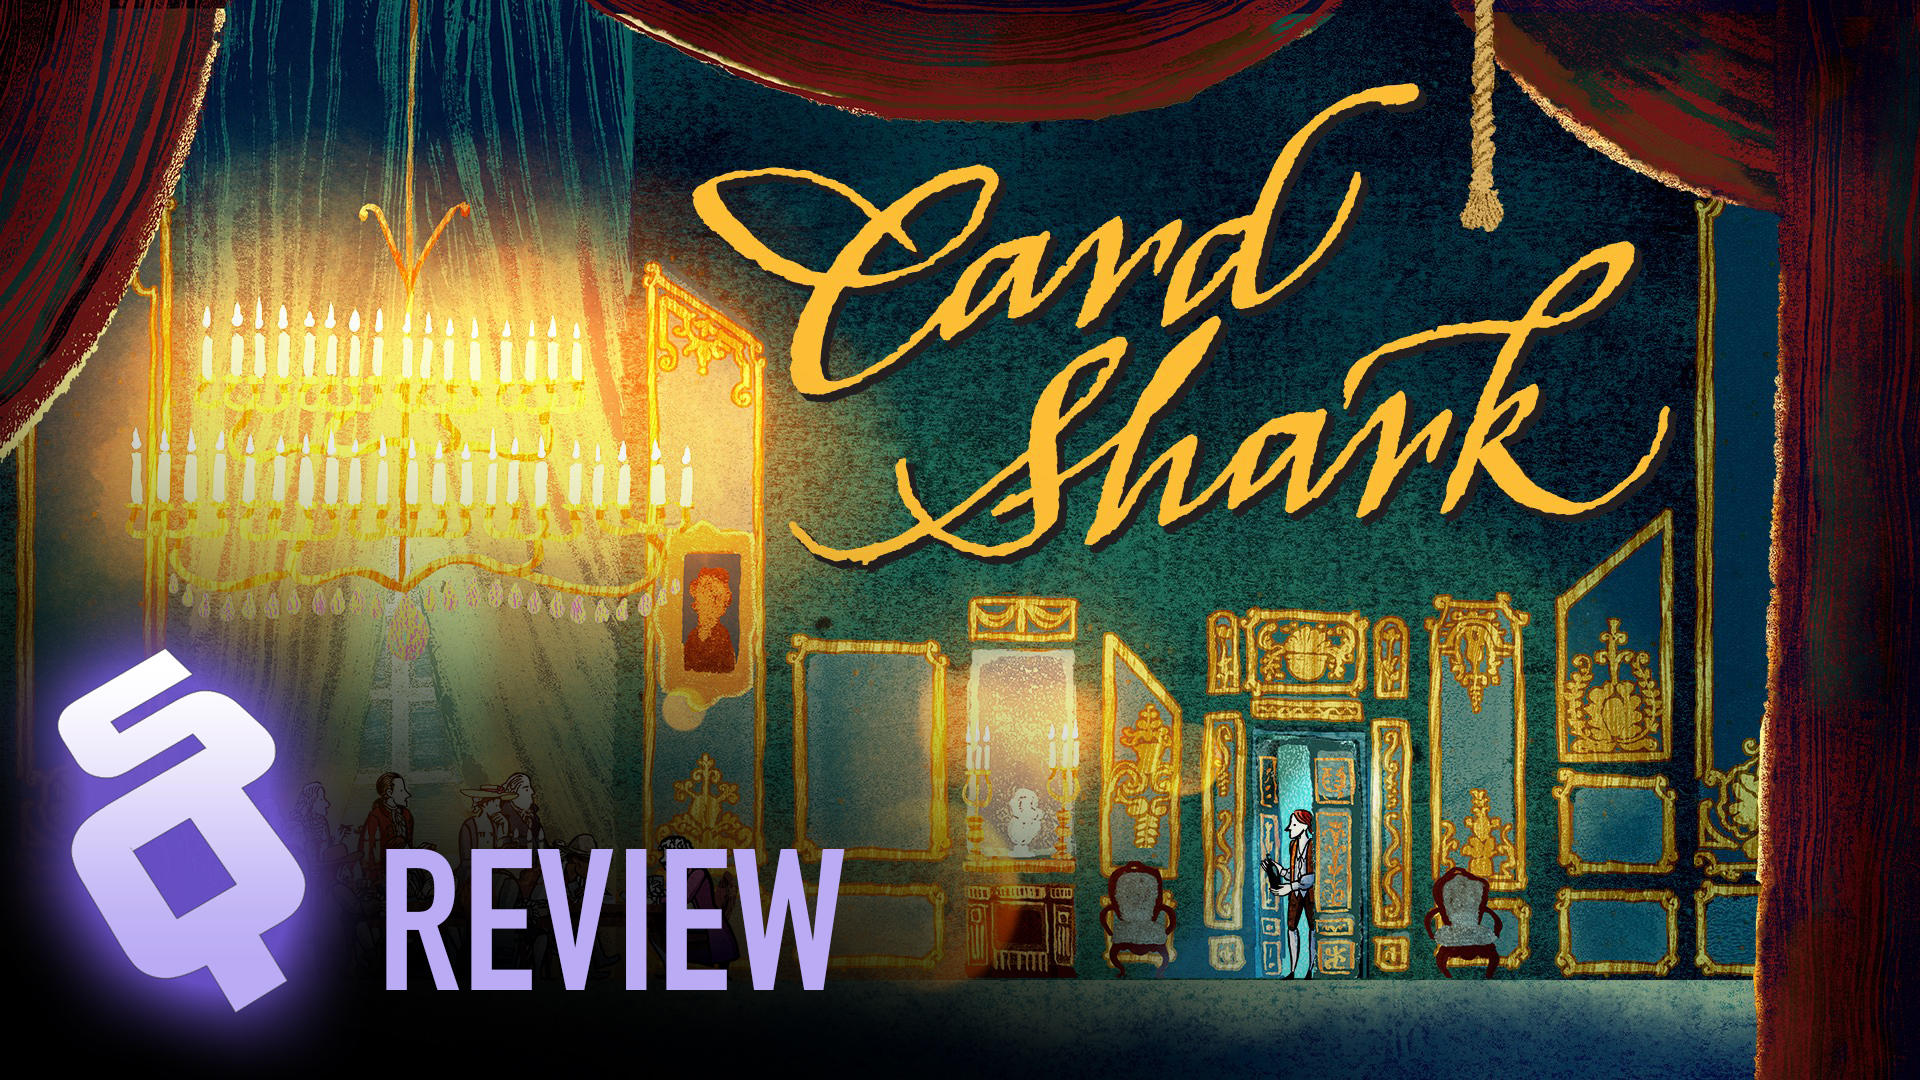 Review: Card Shark